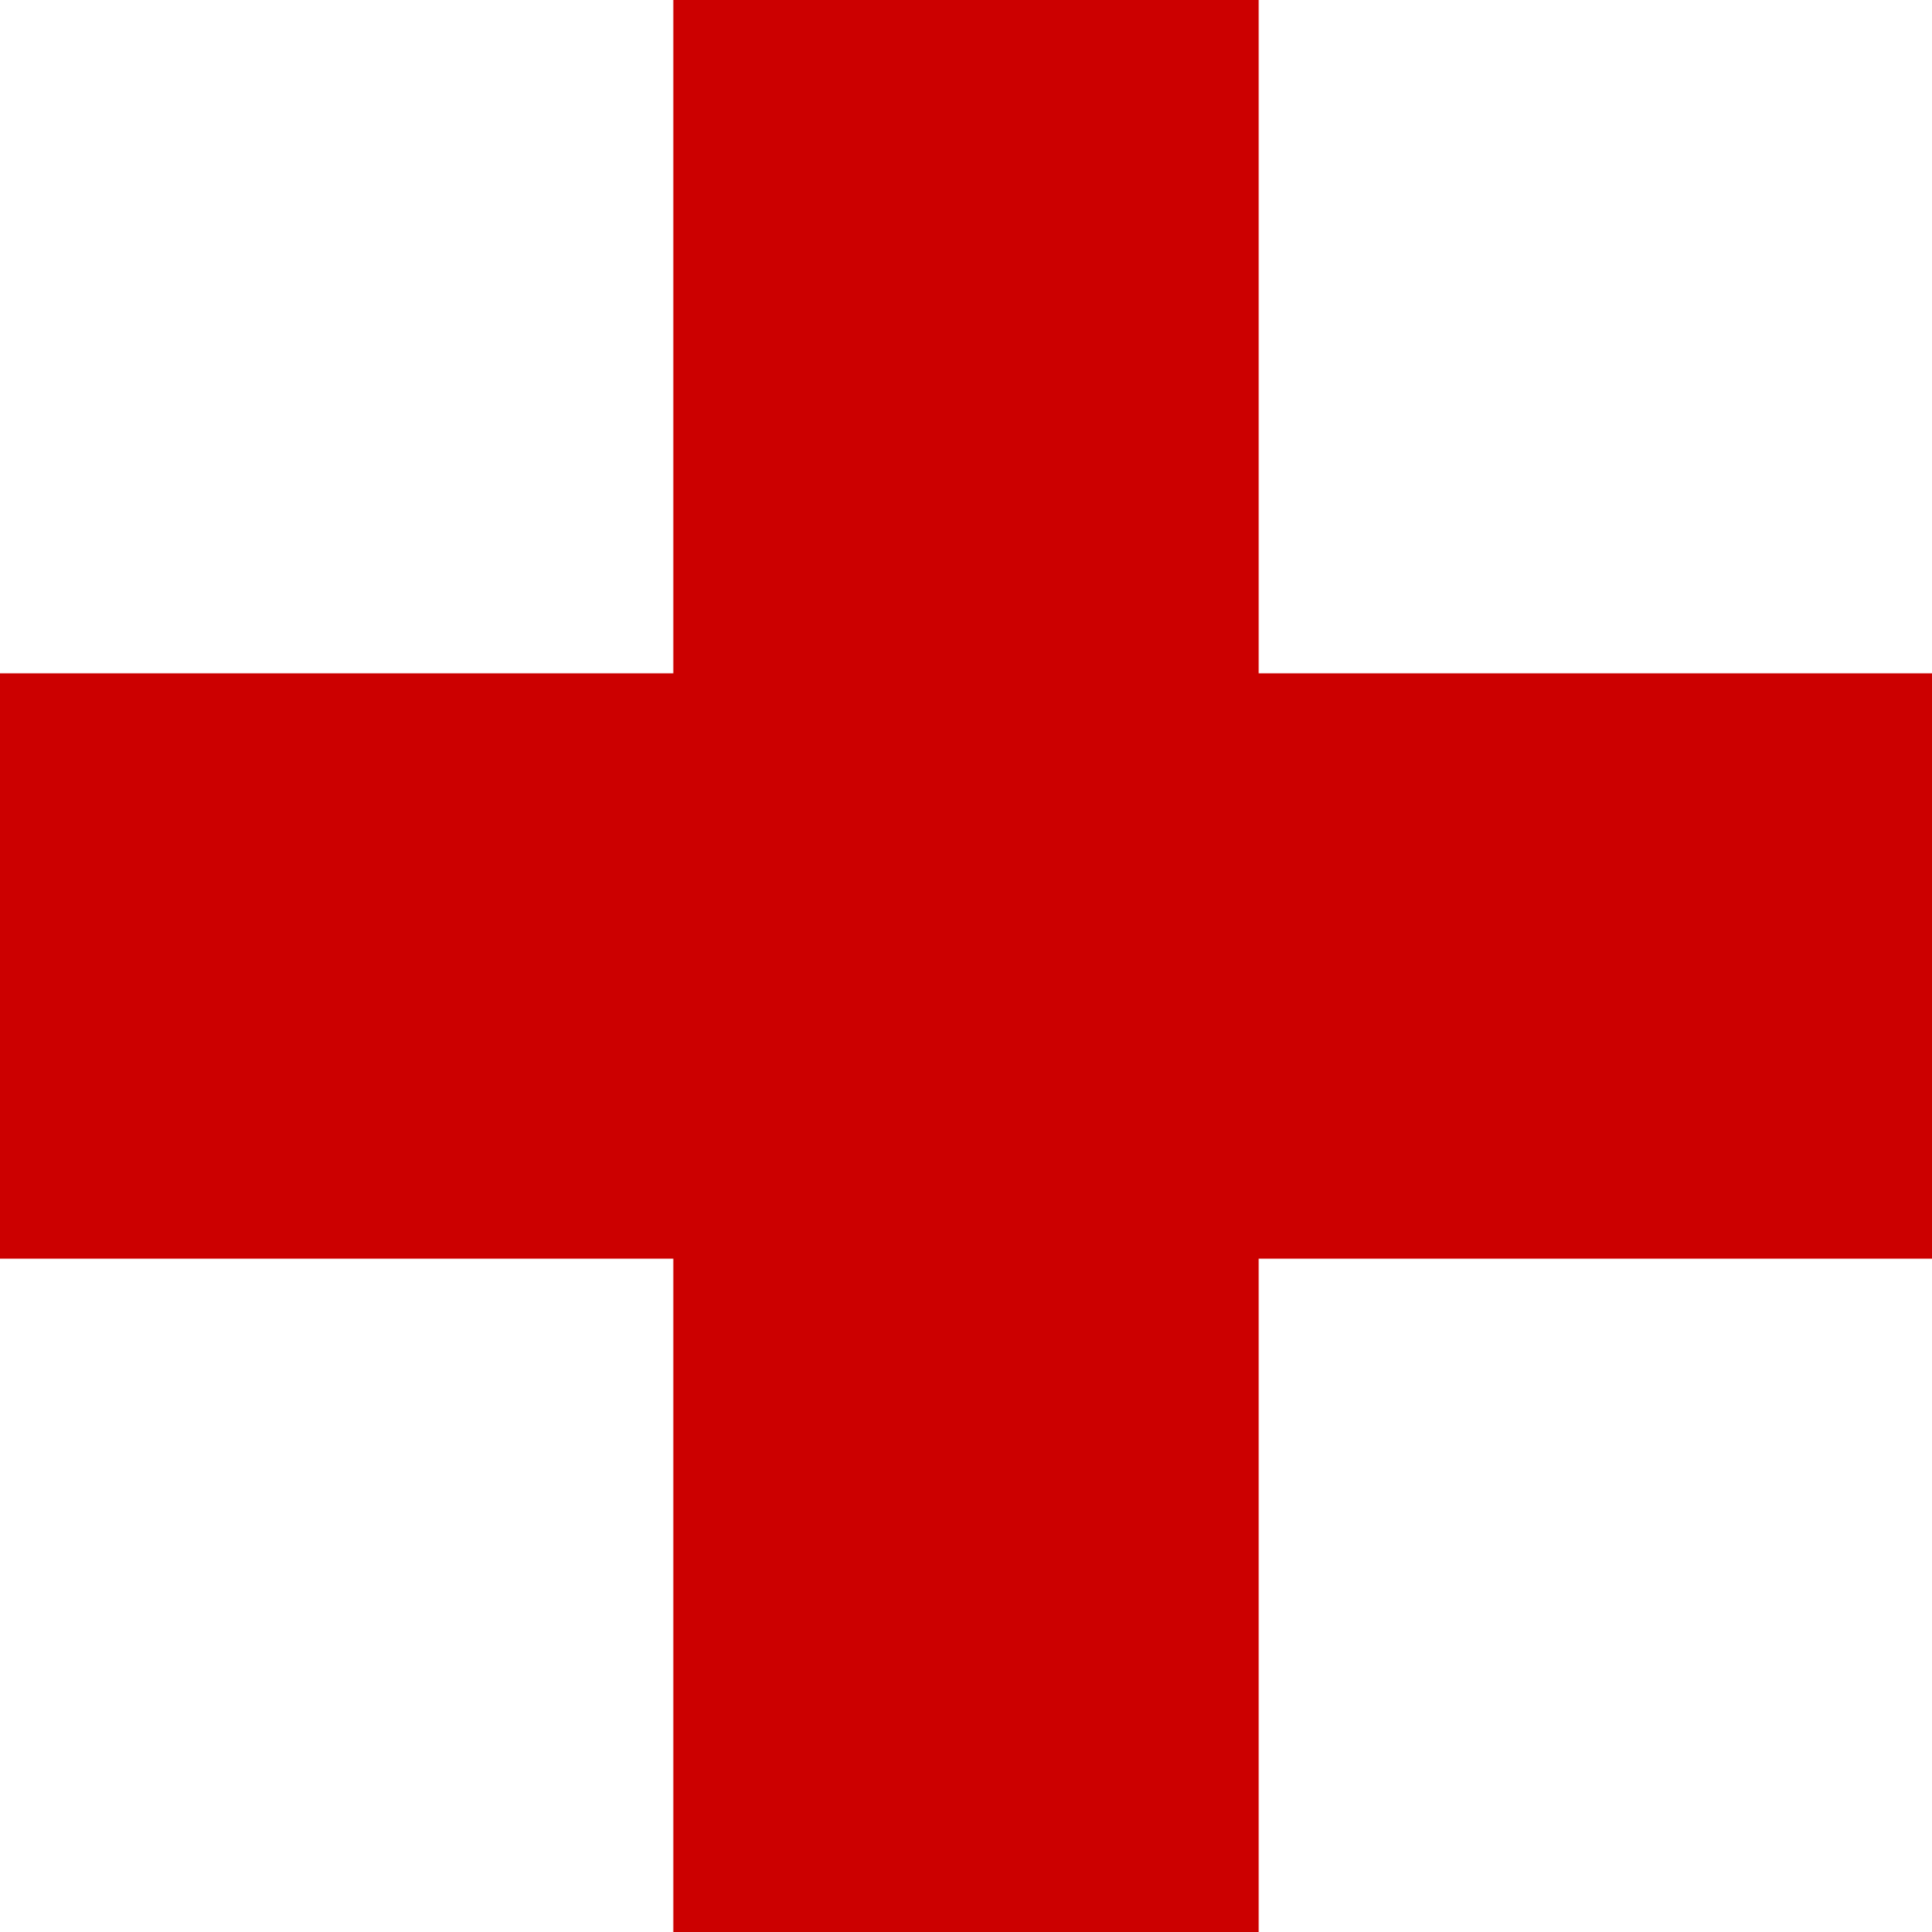 File:Red Cross icon.svg - Wikipedia